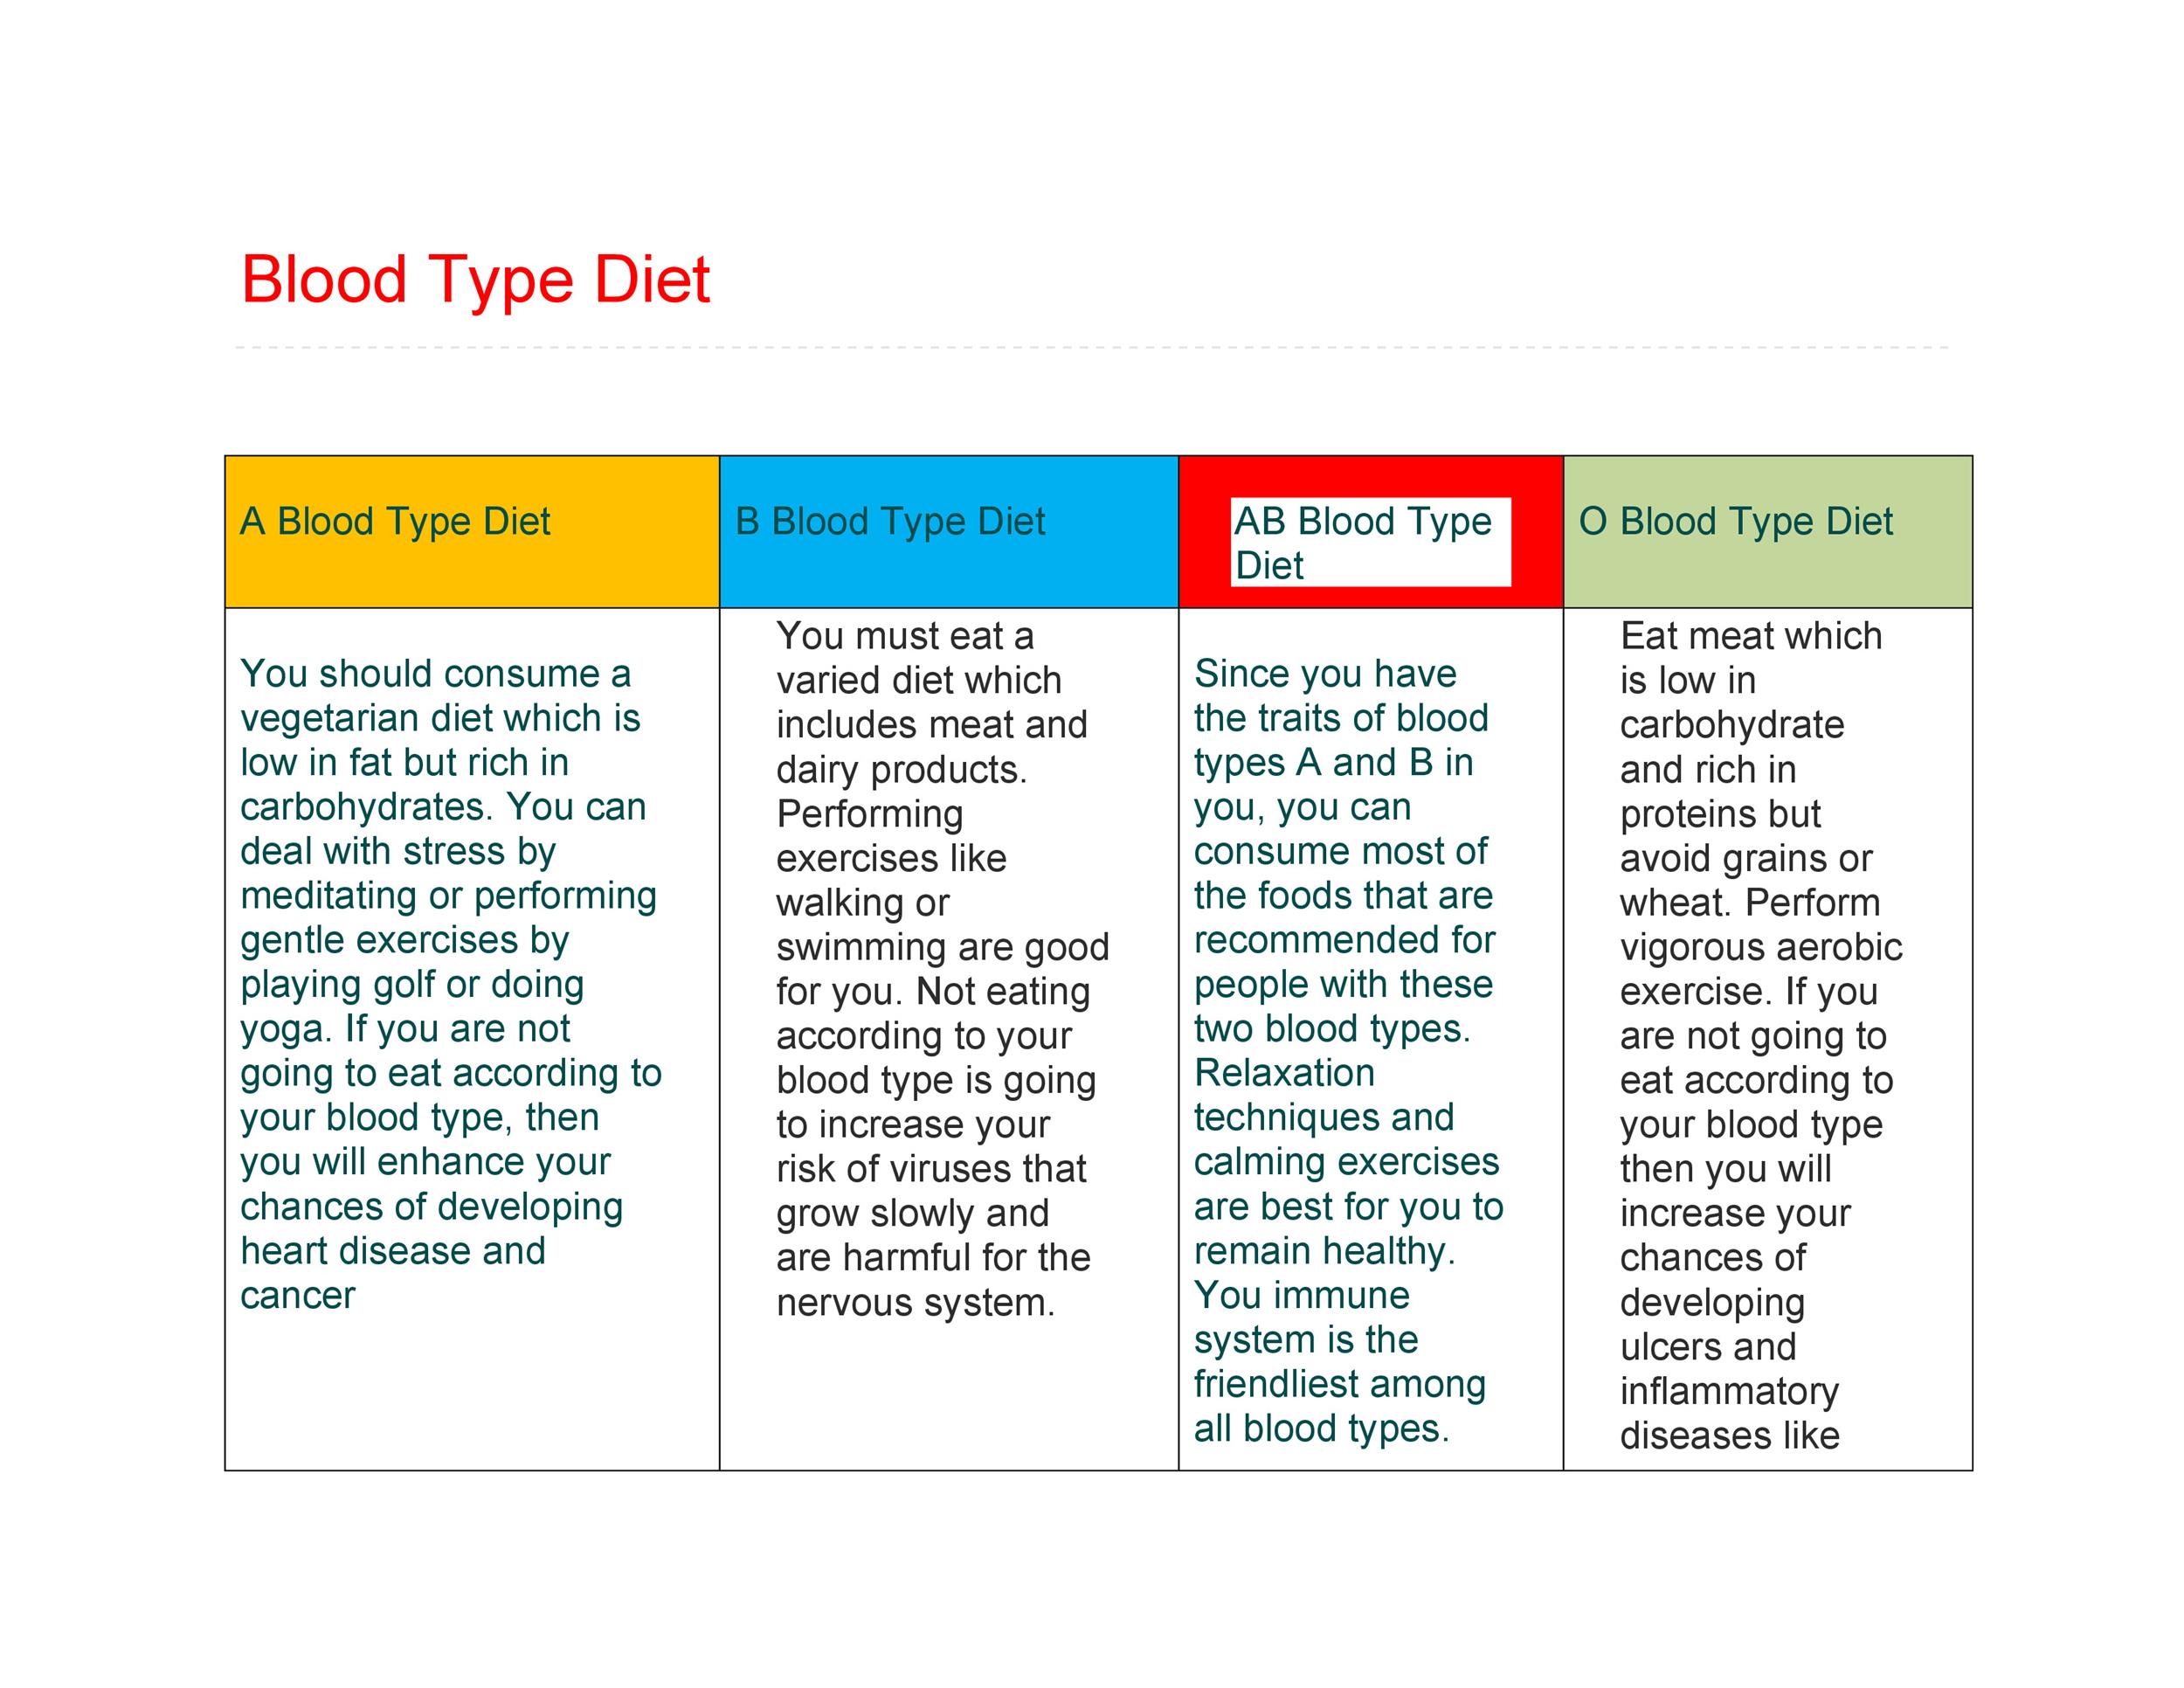 A Neg Blood Type Diet